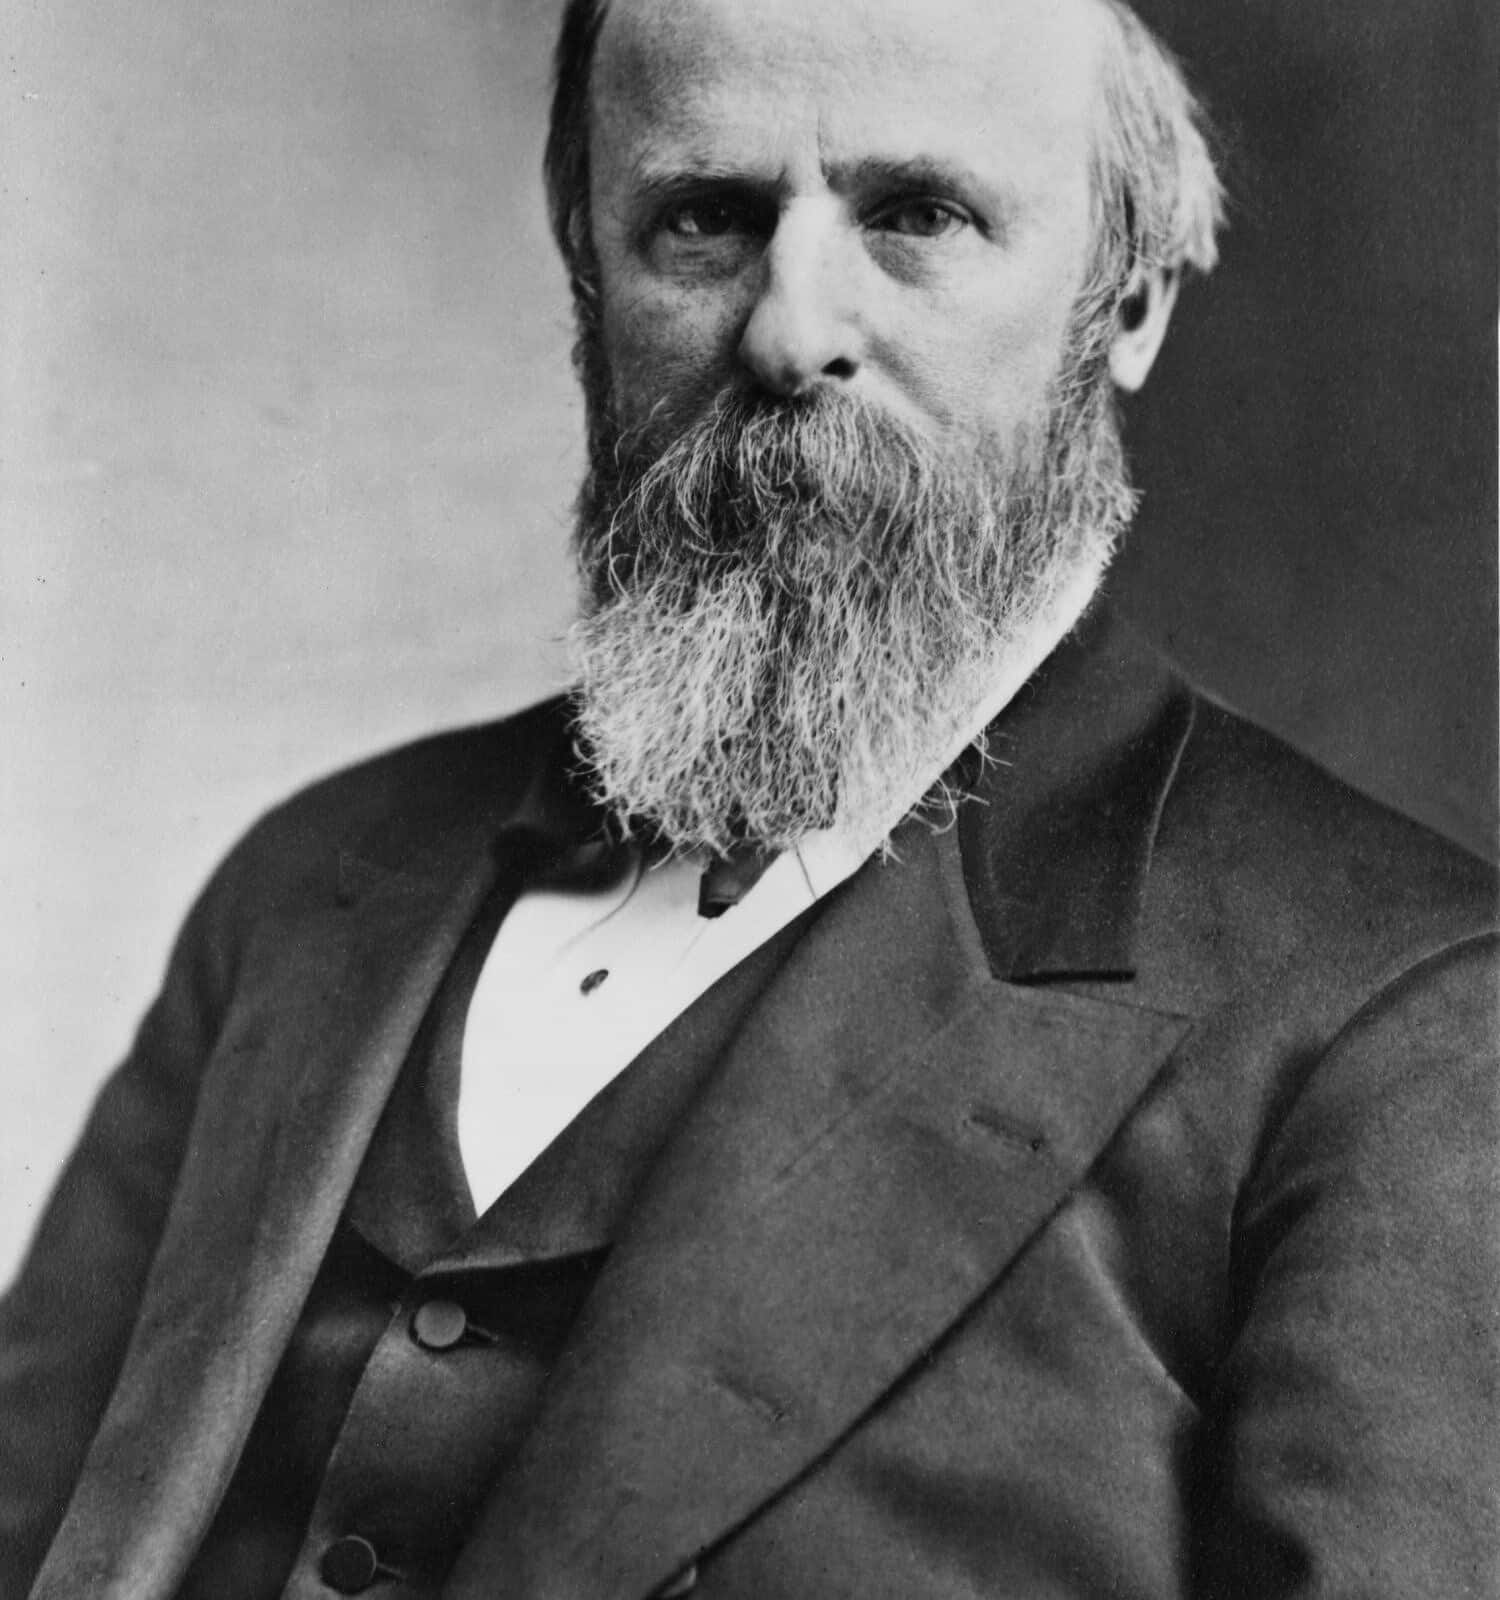 President Rutherford B. Hayes (1822-1893), elected in 1876, running against Democrat Samuel Tilden.